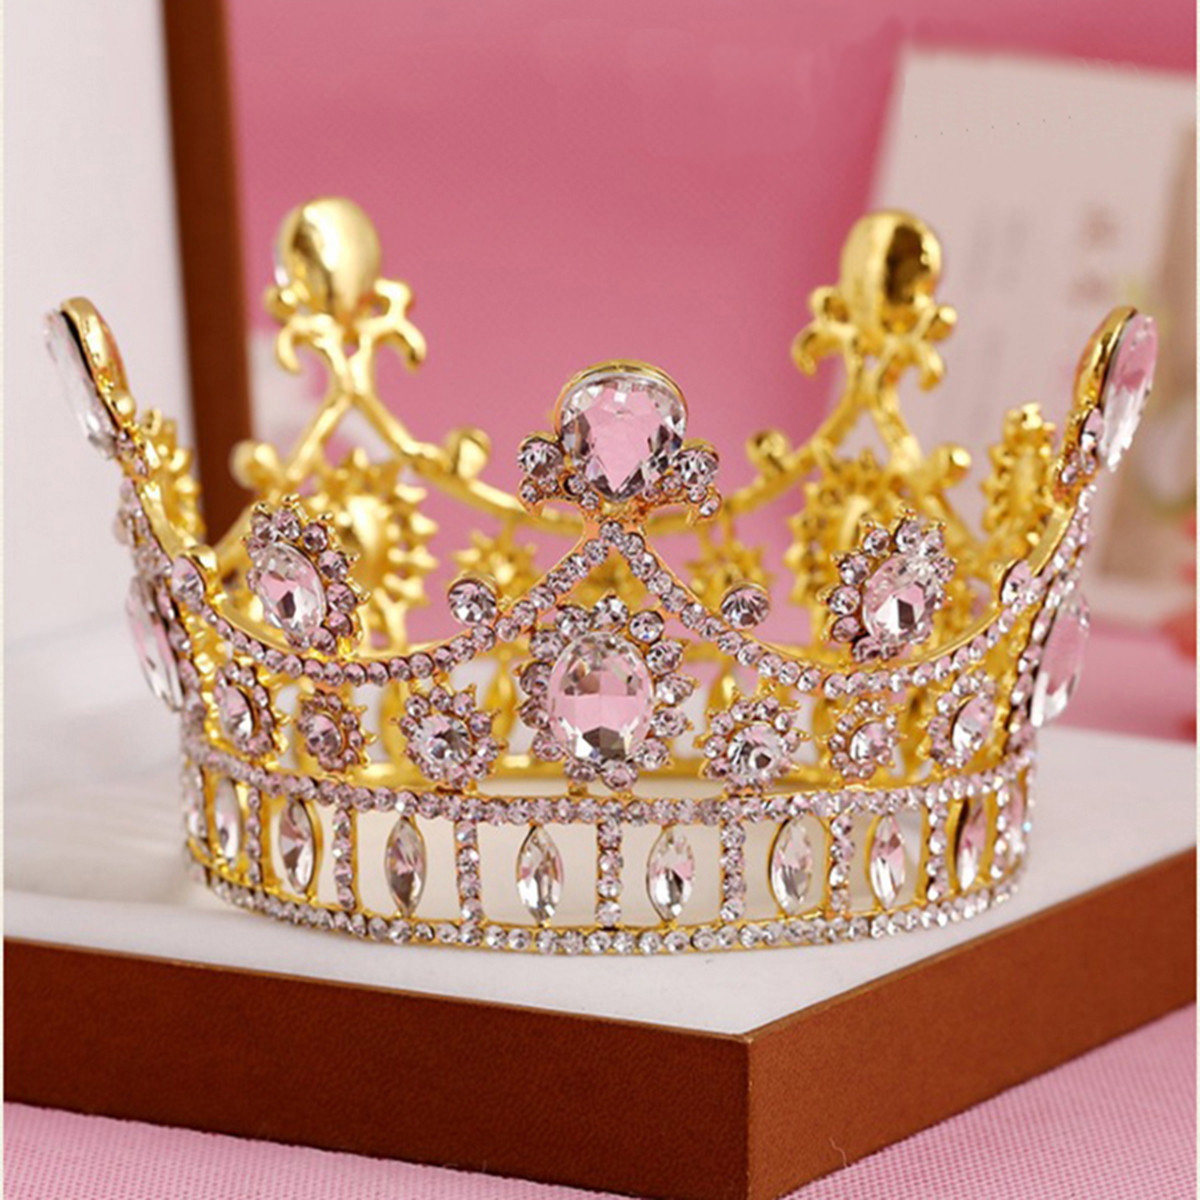 

Bride Gold Princess Queen Crystal Rhinestone Tiara Crown Wedding Bridal Prom Party Headband